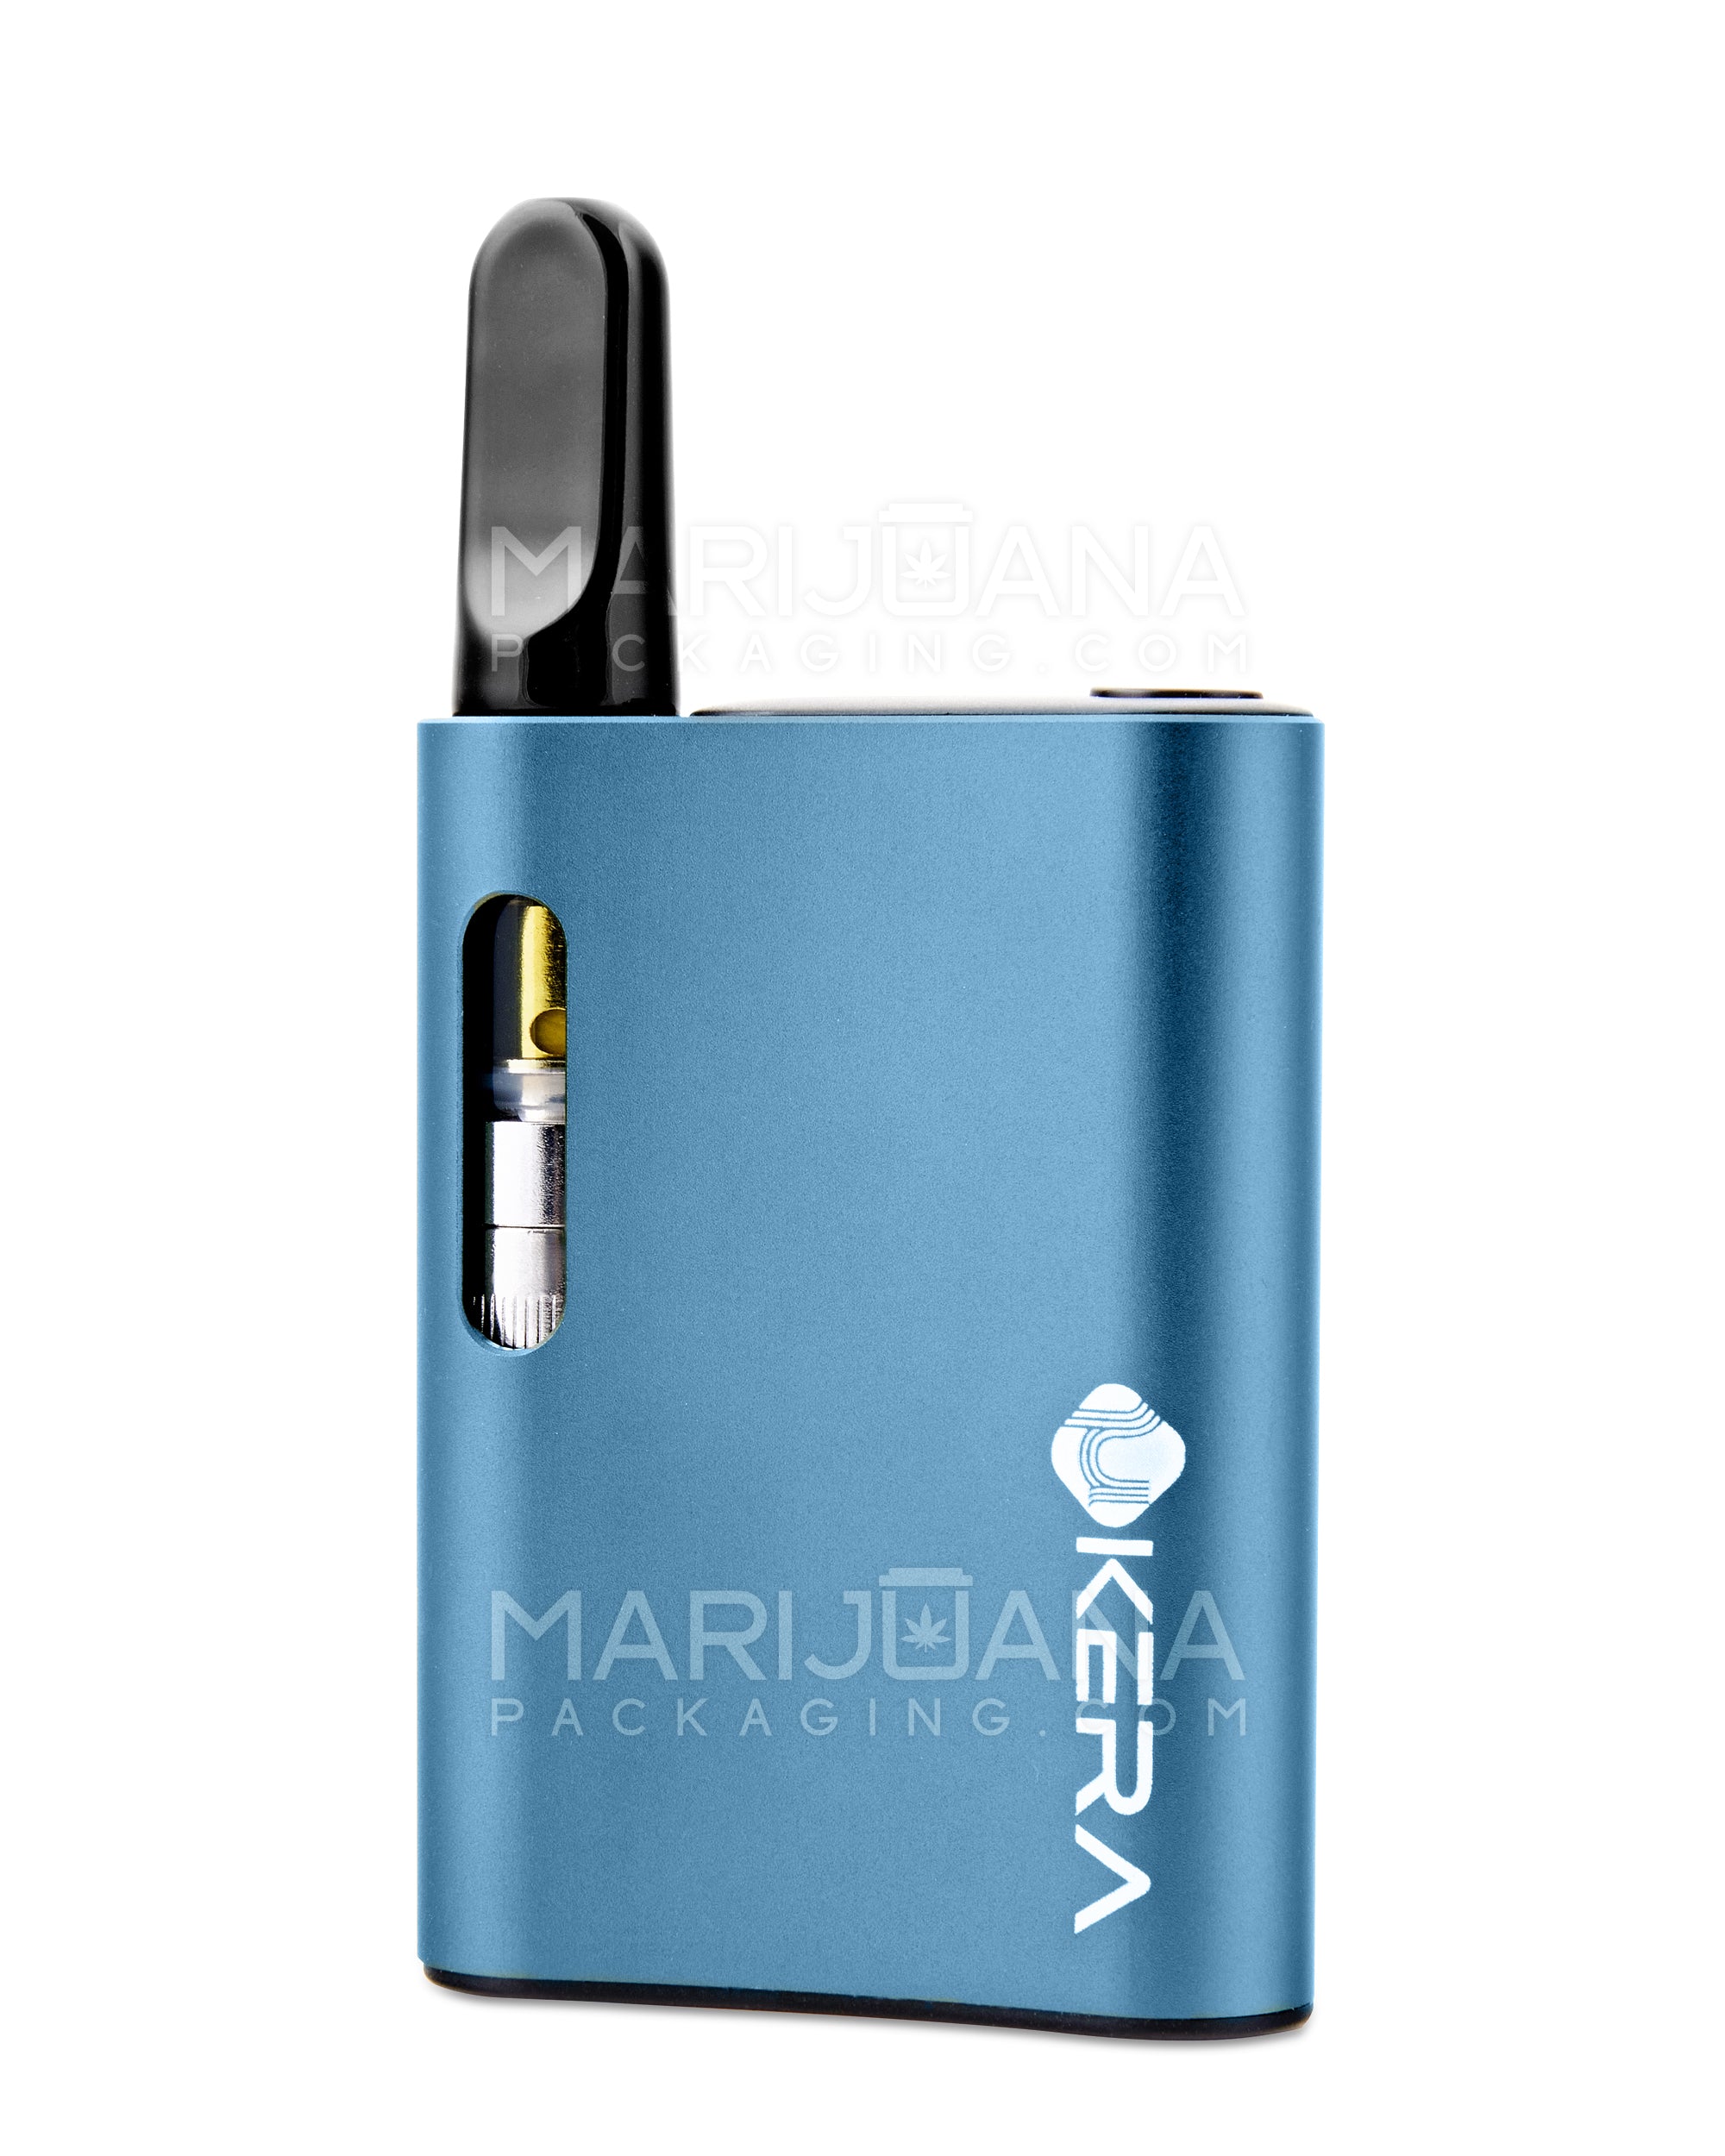 Vault SE Vape Battery with USB Charger | 500mAh - Sky Blue - 510 Thread